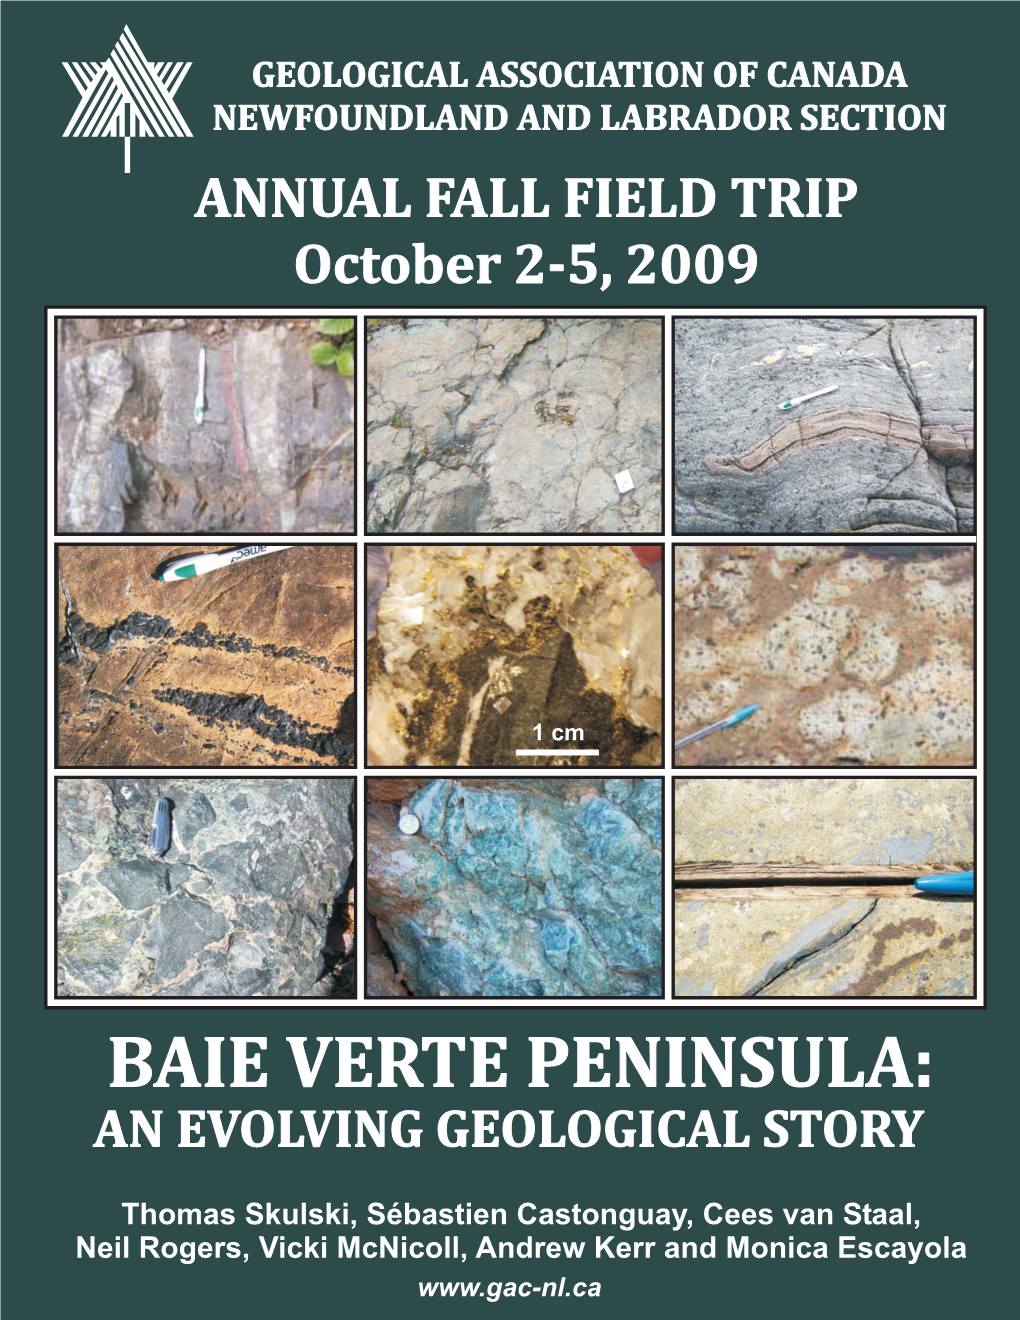 Baie Verte Peninsula: an Evolving Geological Story